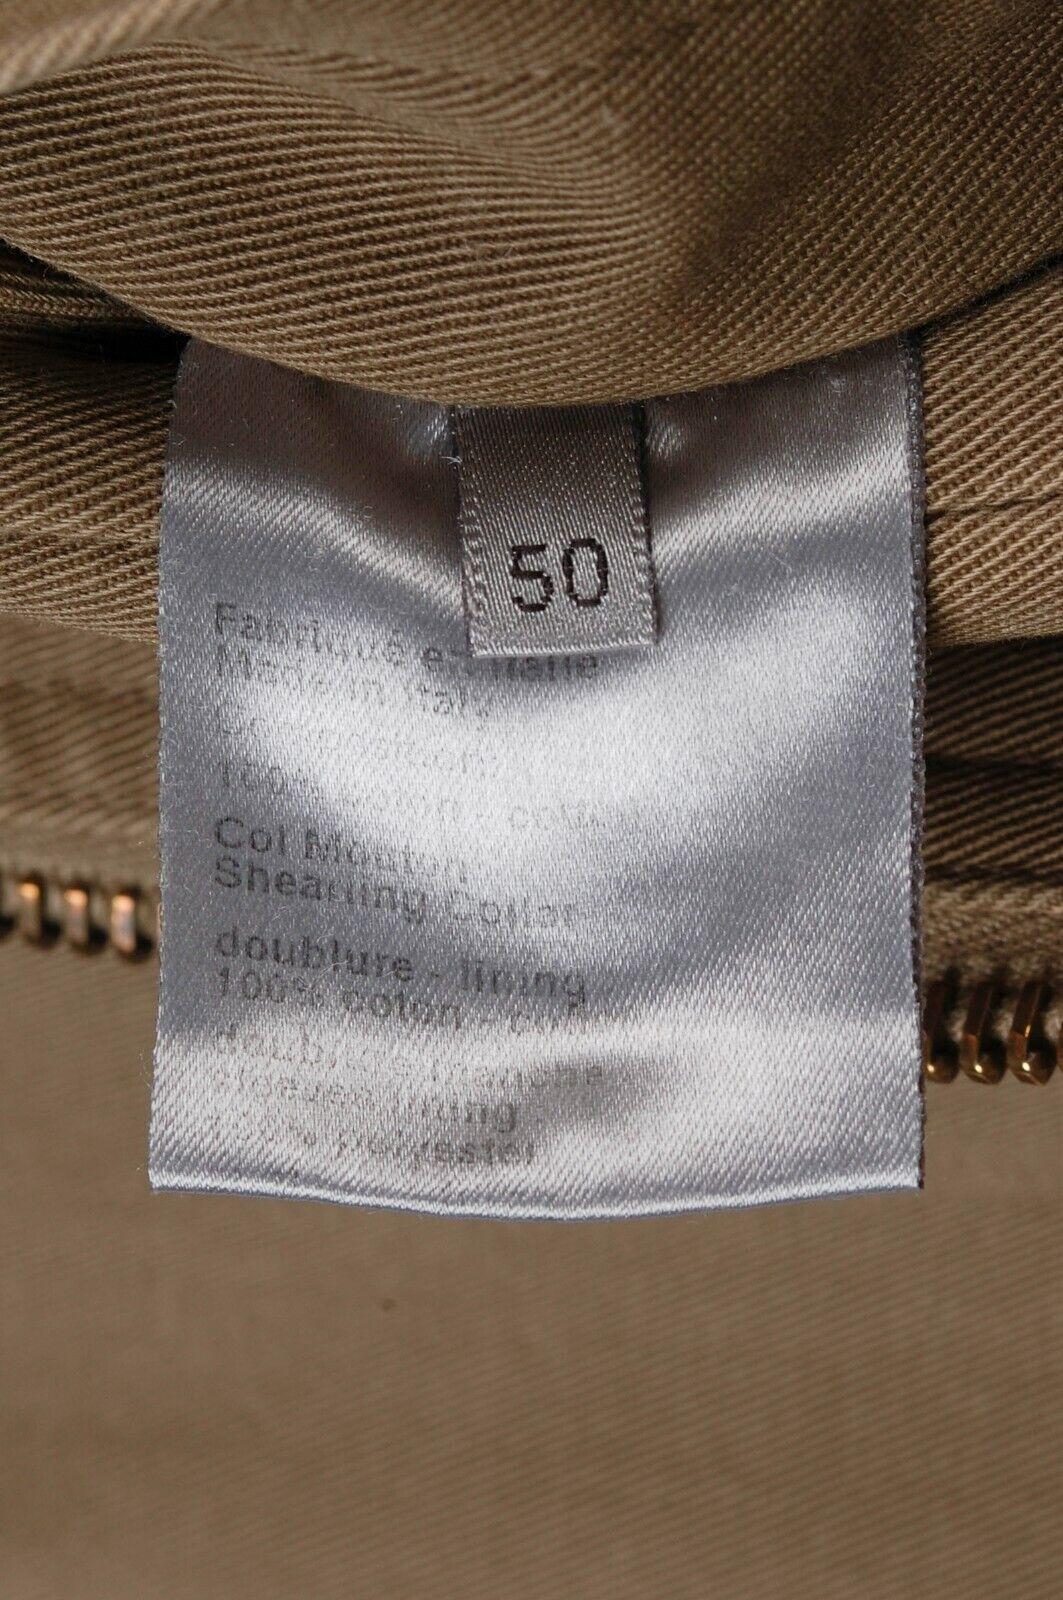 Men's Dior Homme AW05 Shearling Collar Men Hedi Slimane Bomber Jacket in Sz. 50IT(M) For Sale